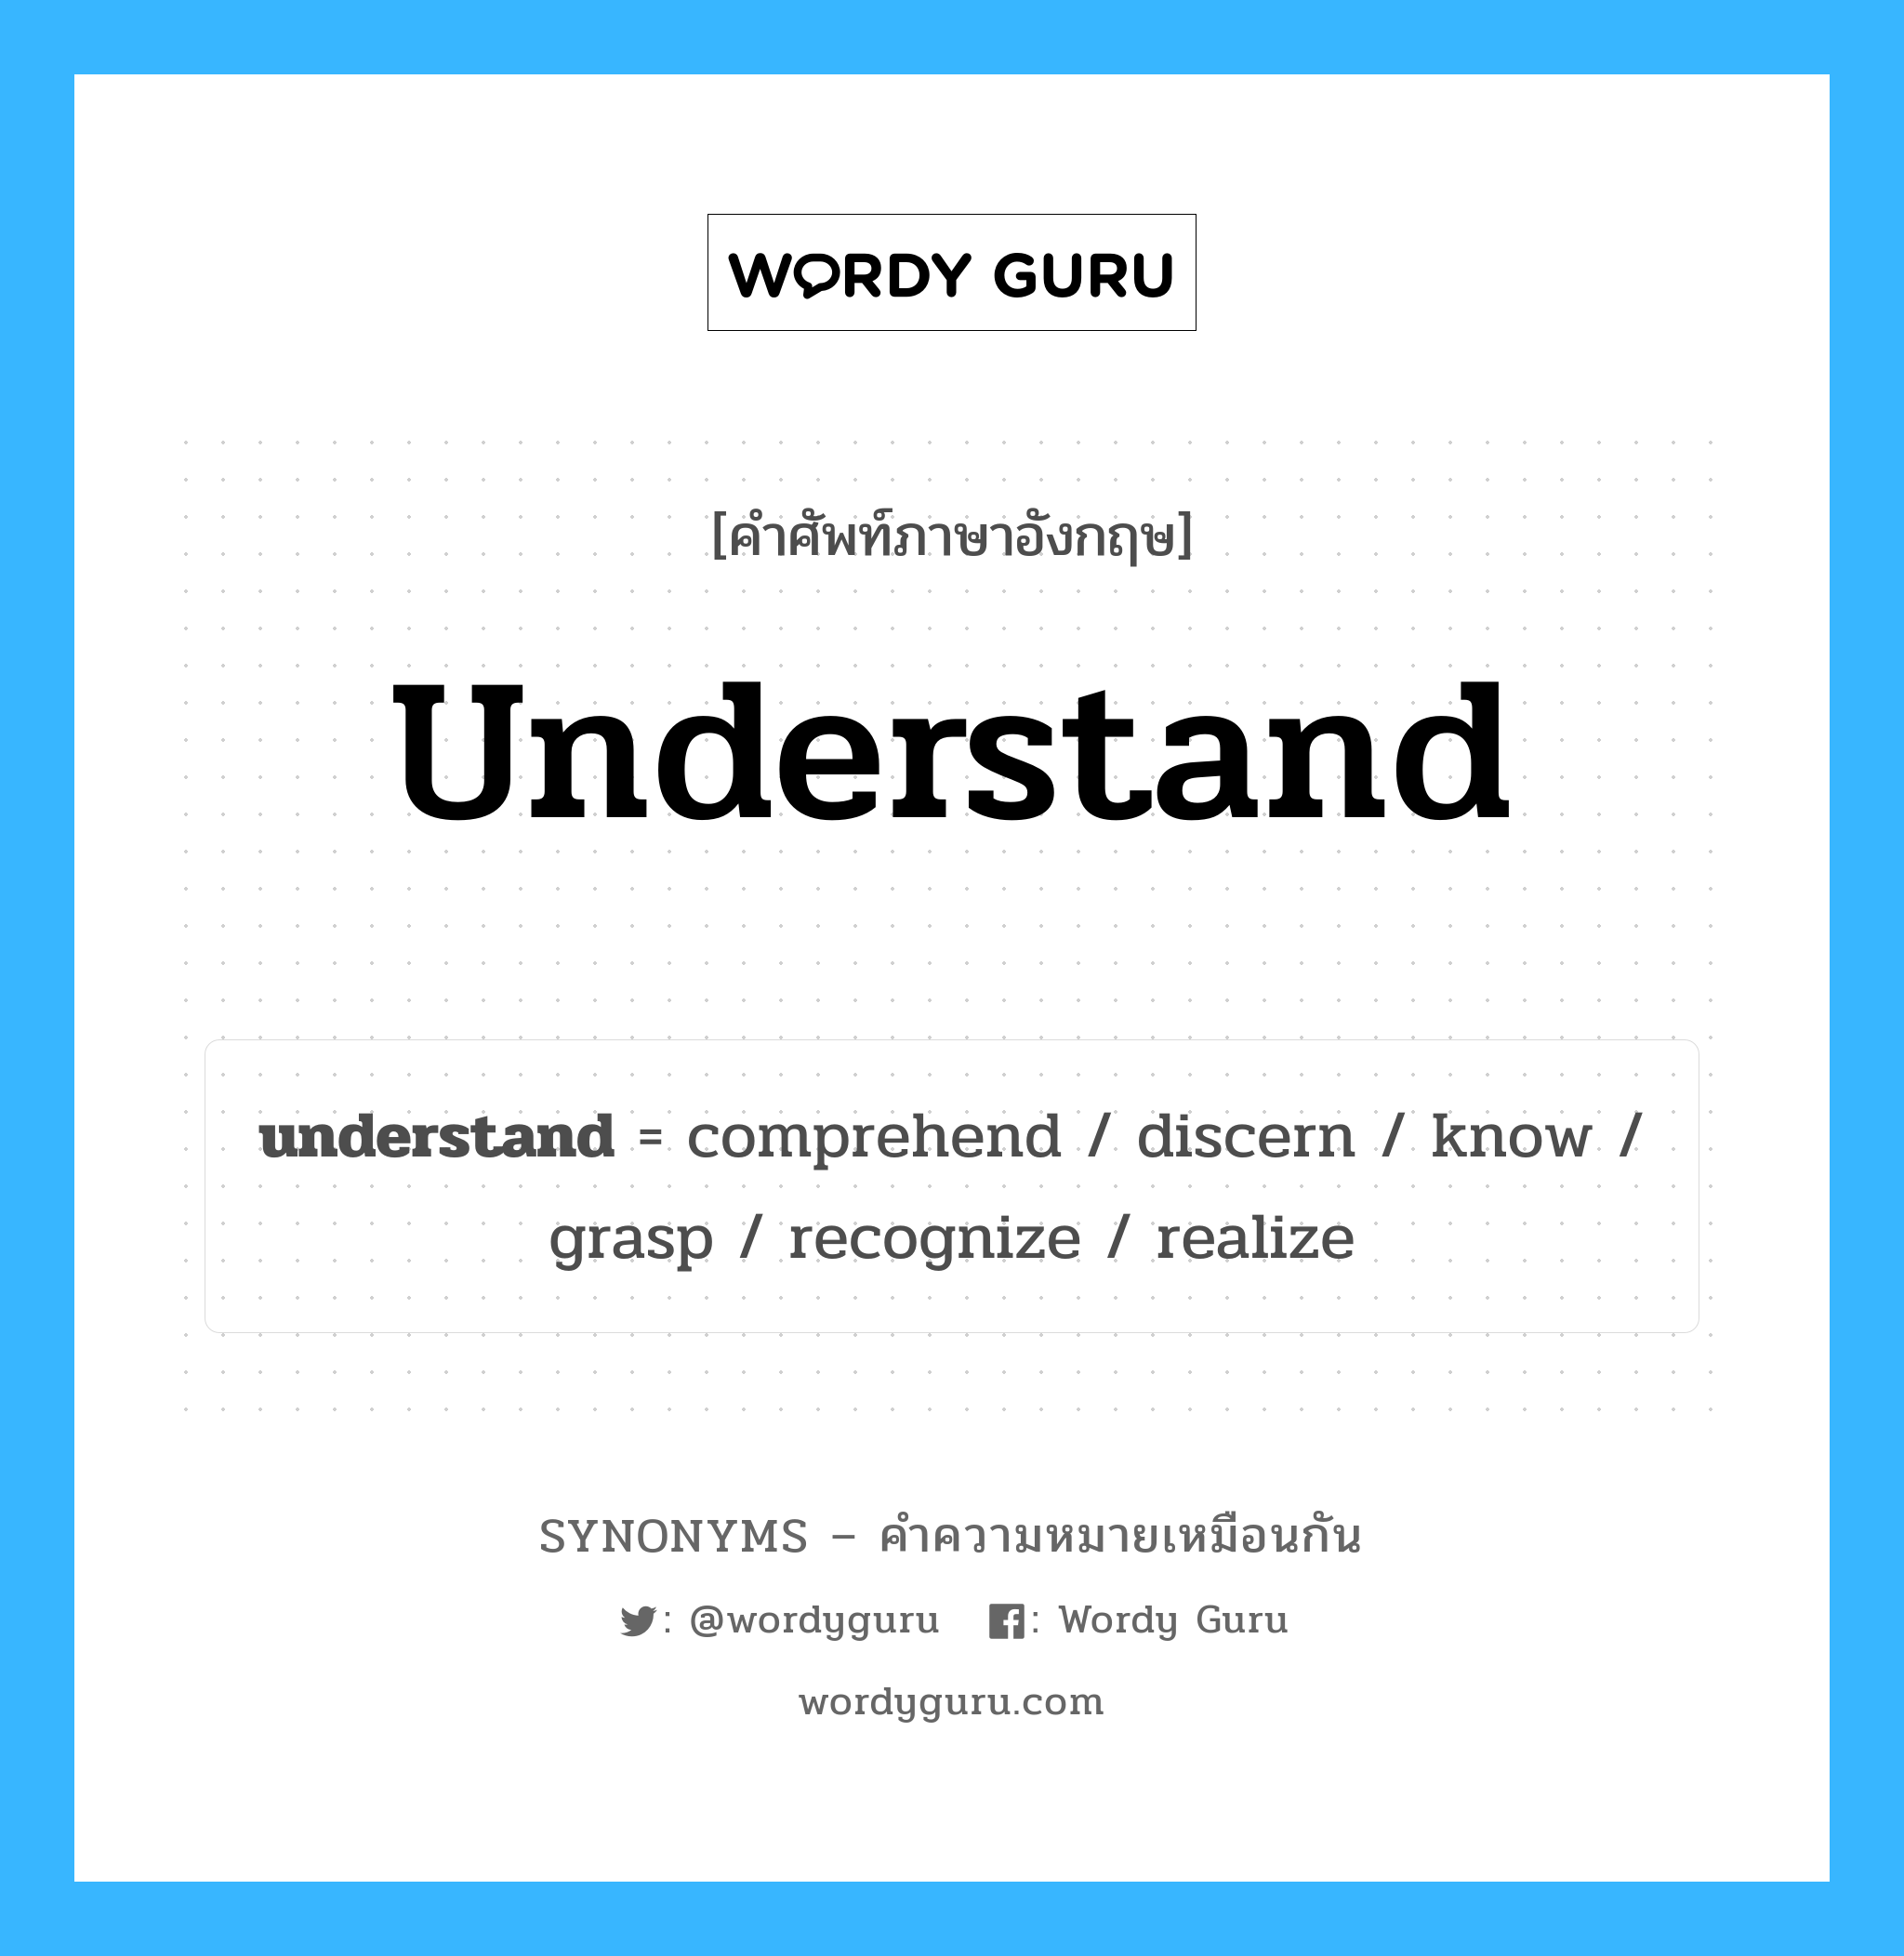 grasp เป็นหนึ่งใน understand และมีคำอื่น ๆ อีกดังนี้, คำศัพท์ภาษาอังกฤษ grasp ความหมายคล้ายกันกับ understand แปลว่า มีความเข้าใจ หมวด understand